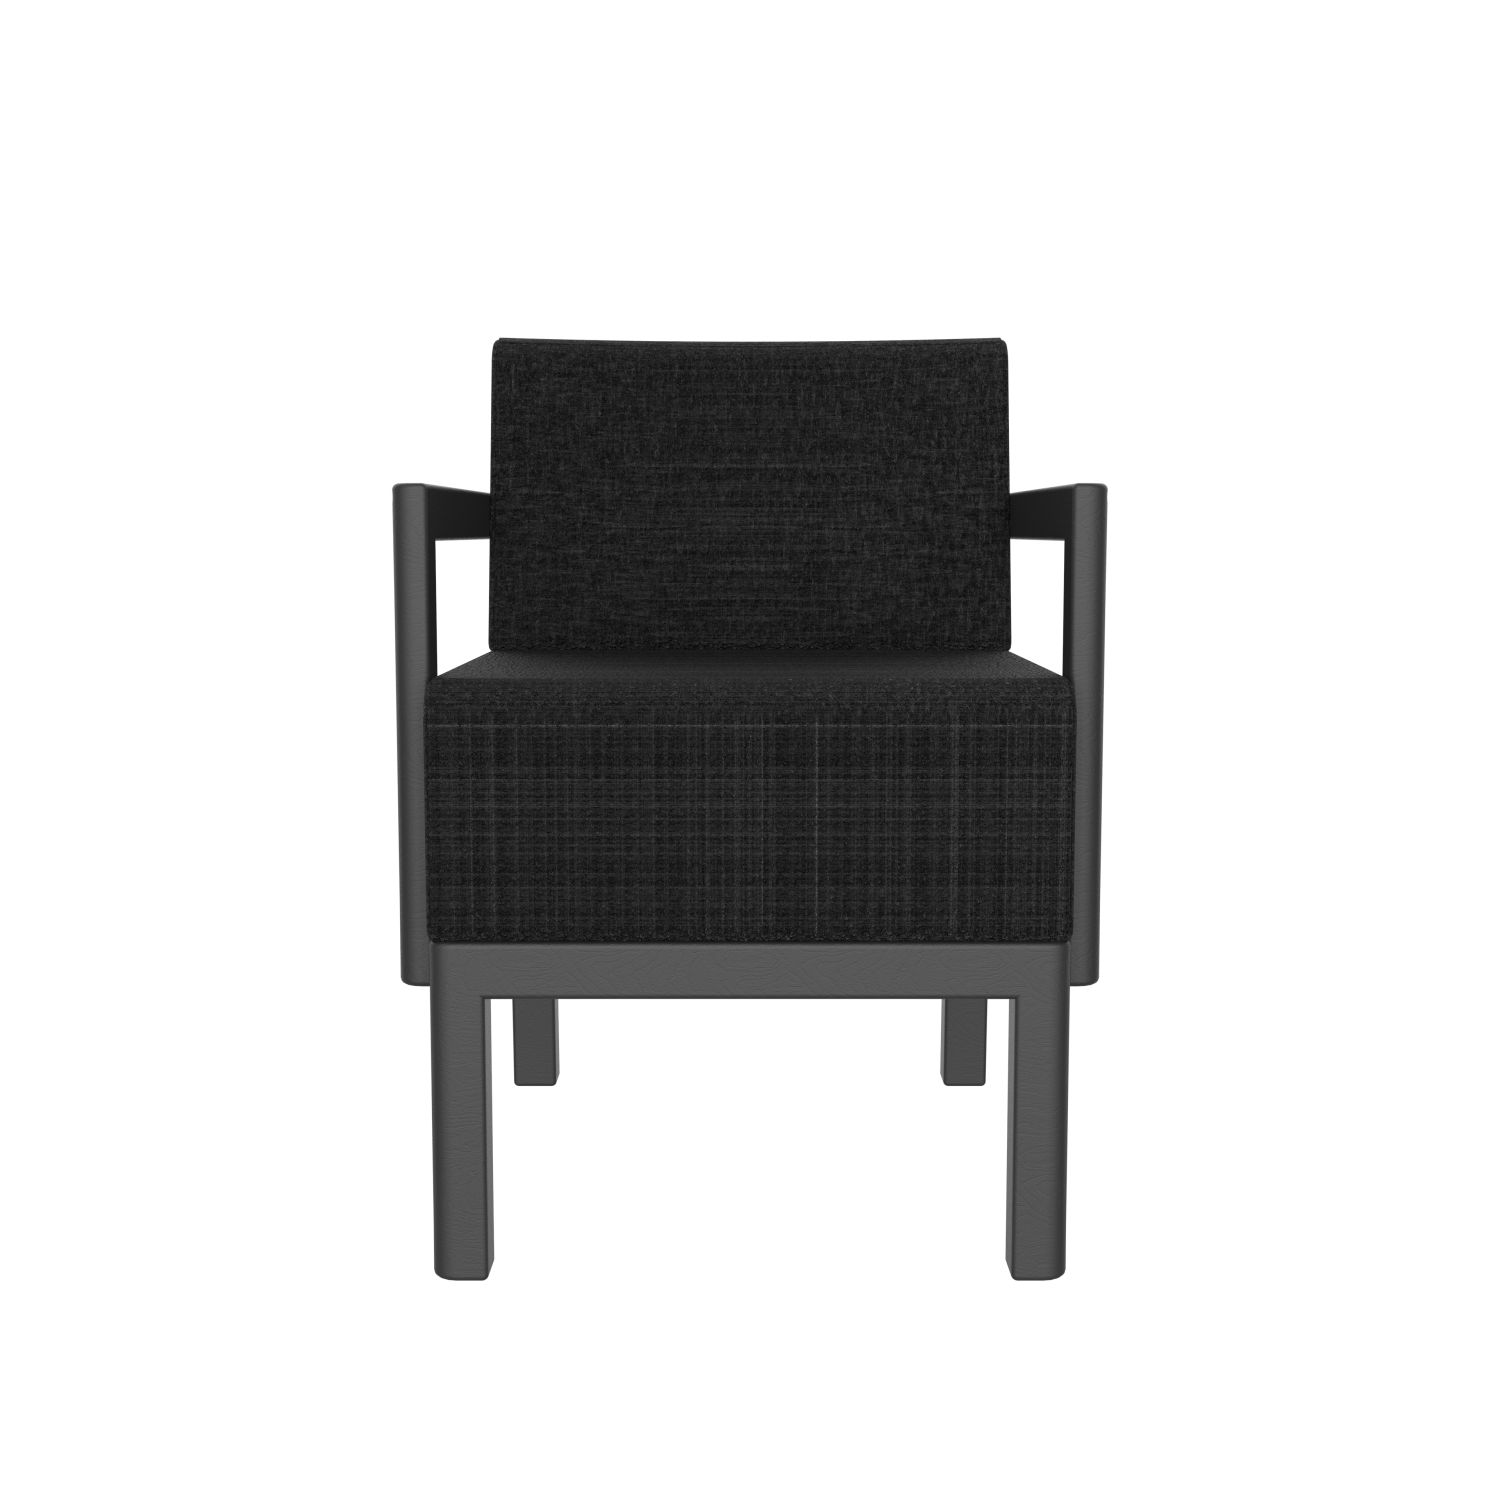 lensvelt piet boon chair 02 with armrests alpine onyx 169 price level 1 signal black ral9004 hard leg ends